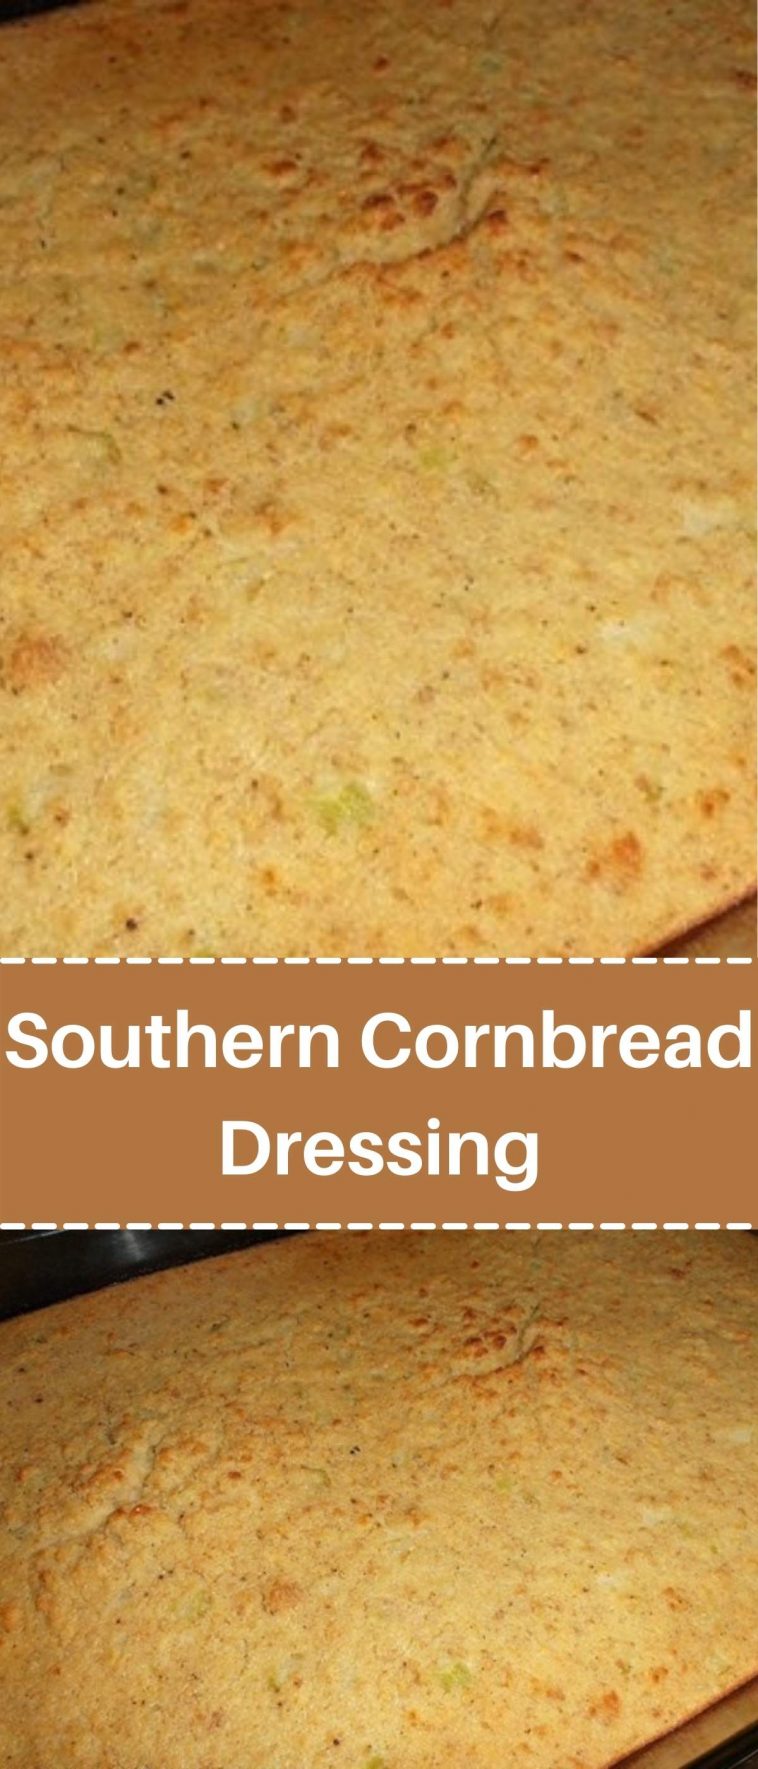 Southern Cornbread Dressing